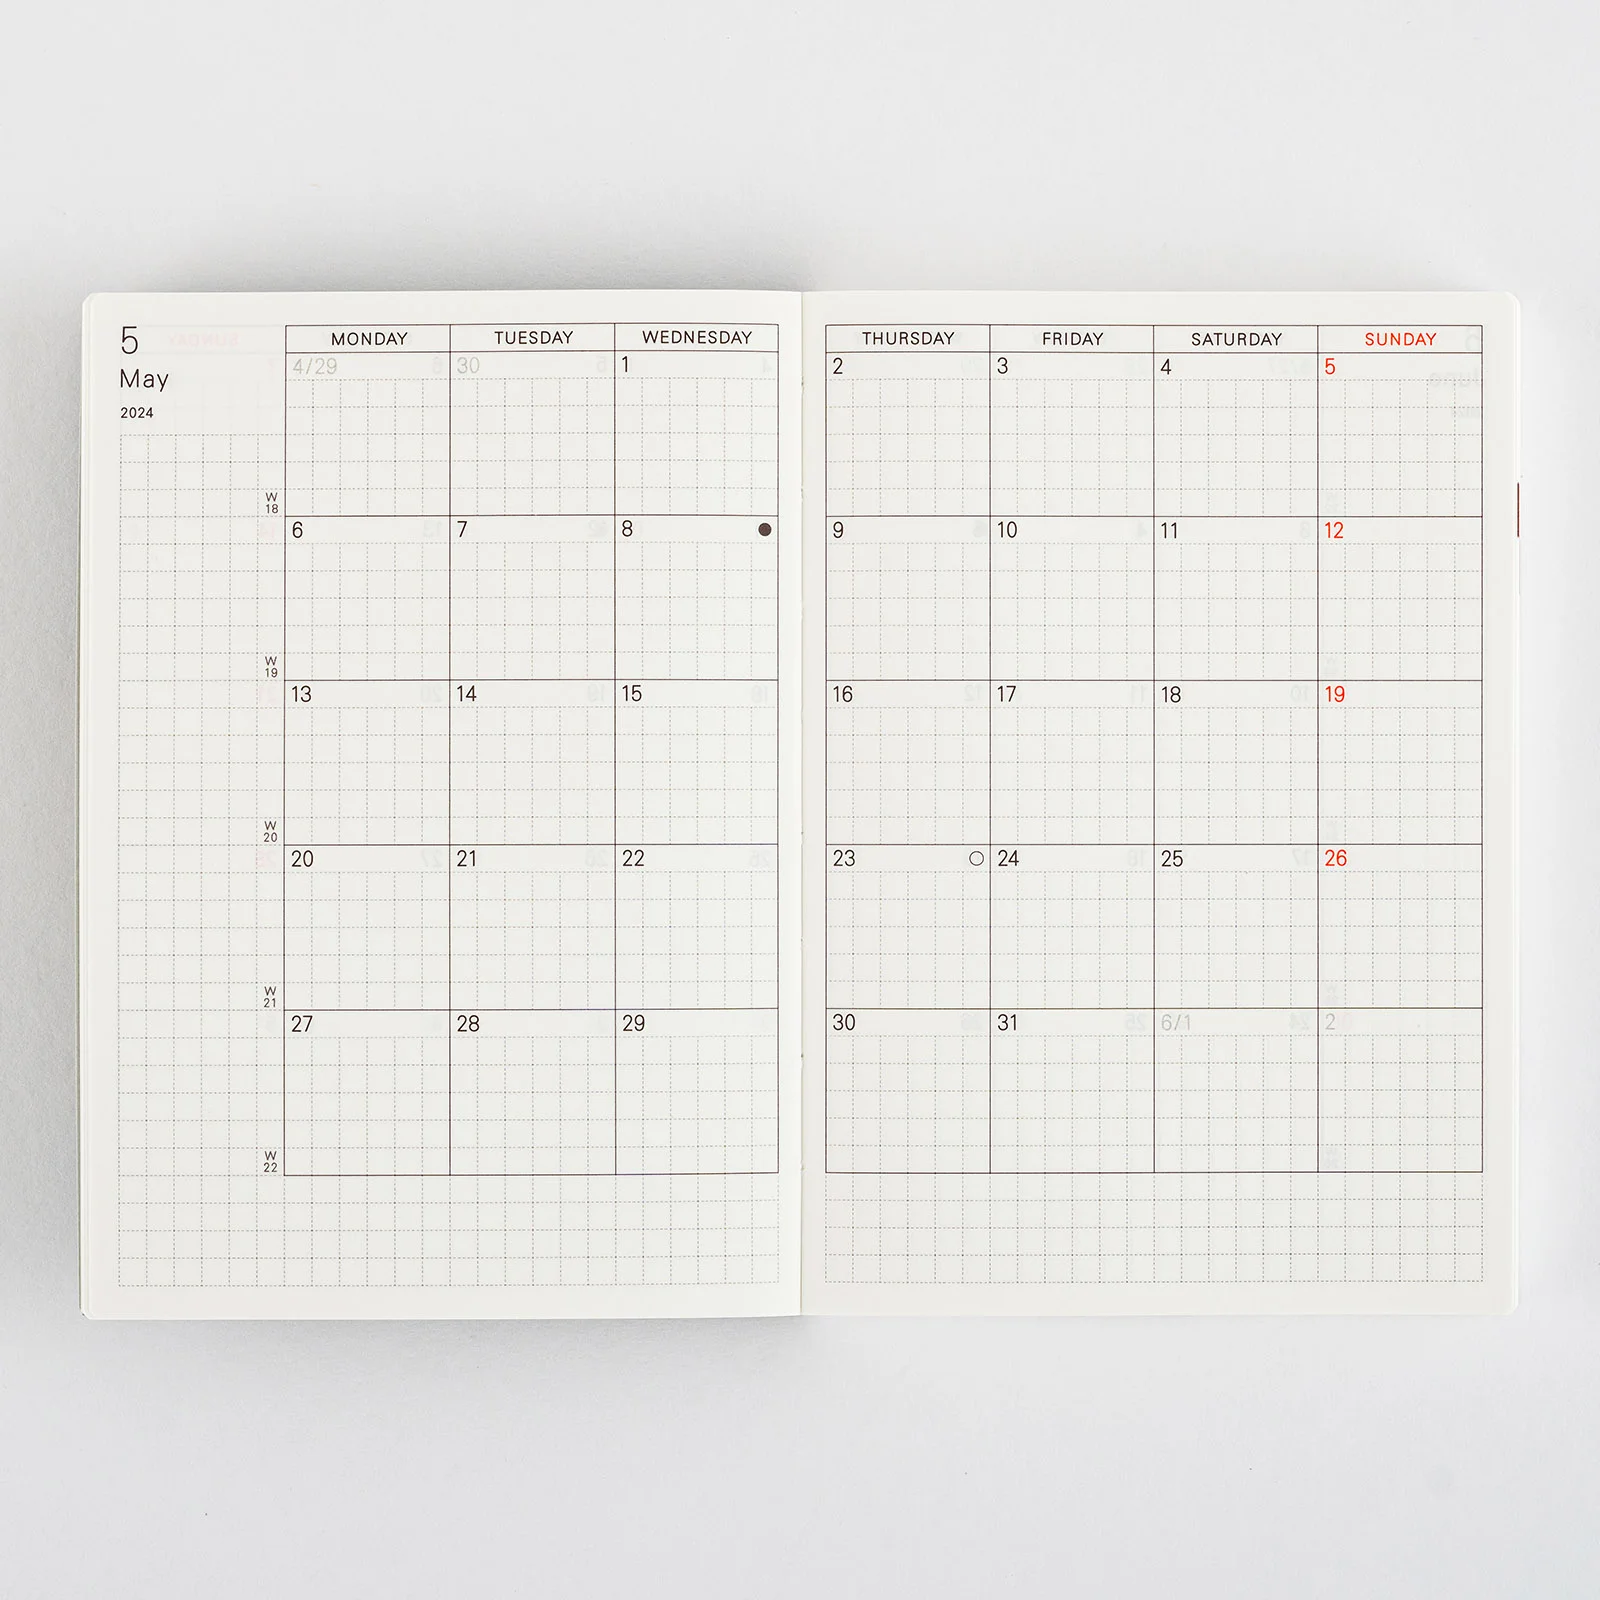 Hobonichi Techo Planner Book (January Start) A6 Size / Daily / Jan